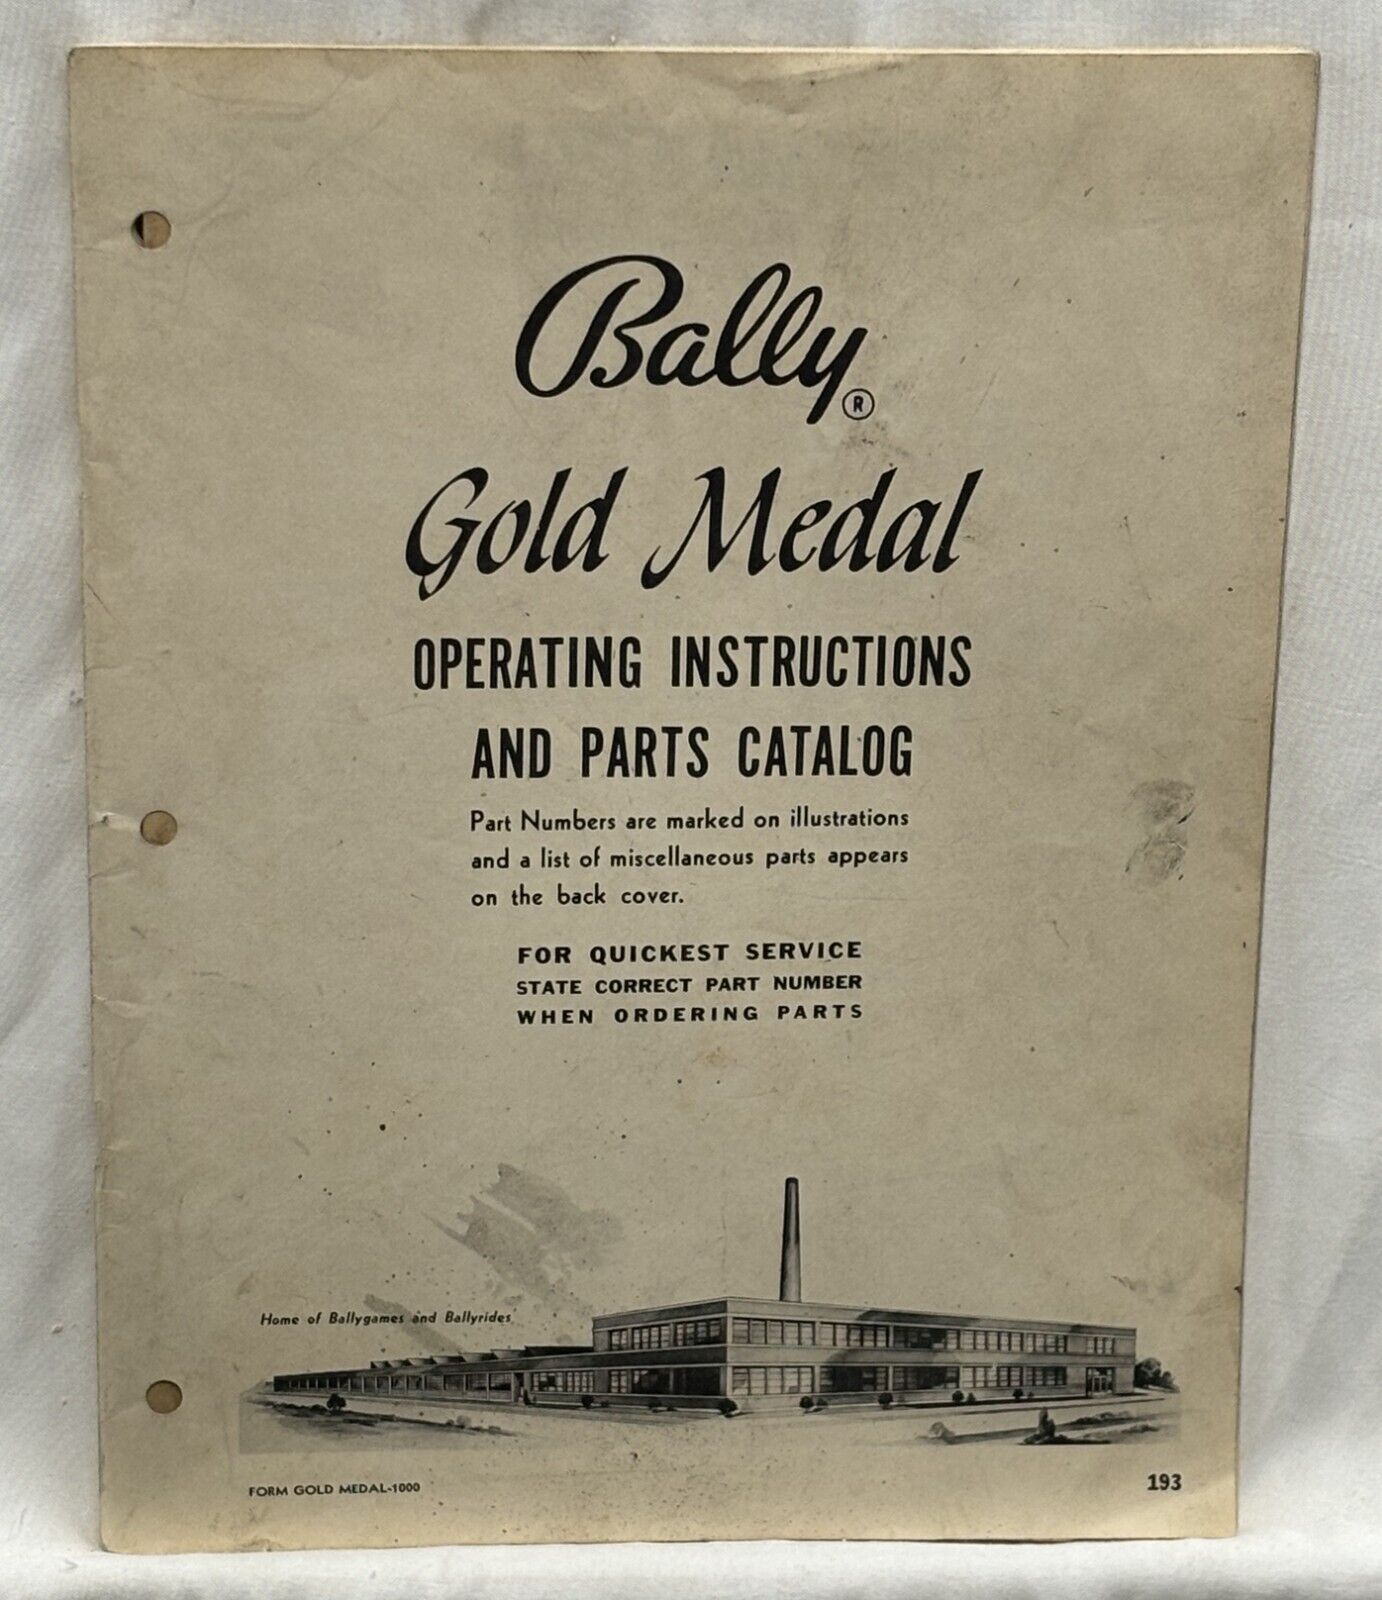 ORIGINAL-BALLY-GOLD MEDAL-OPERATING INSTRUCTIONS AND PARTS CATALOG